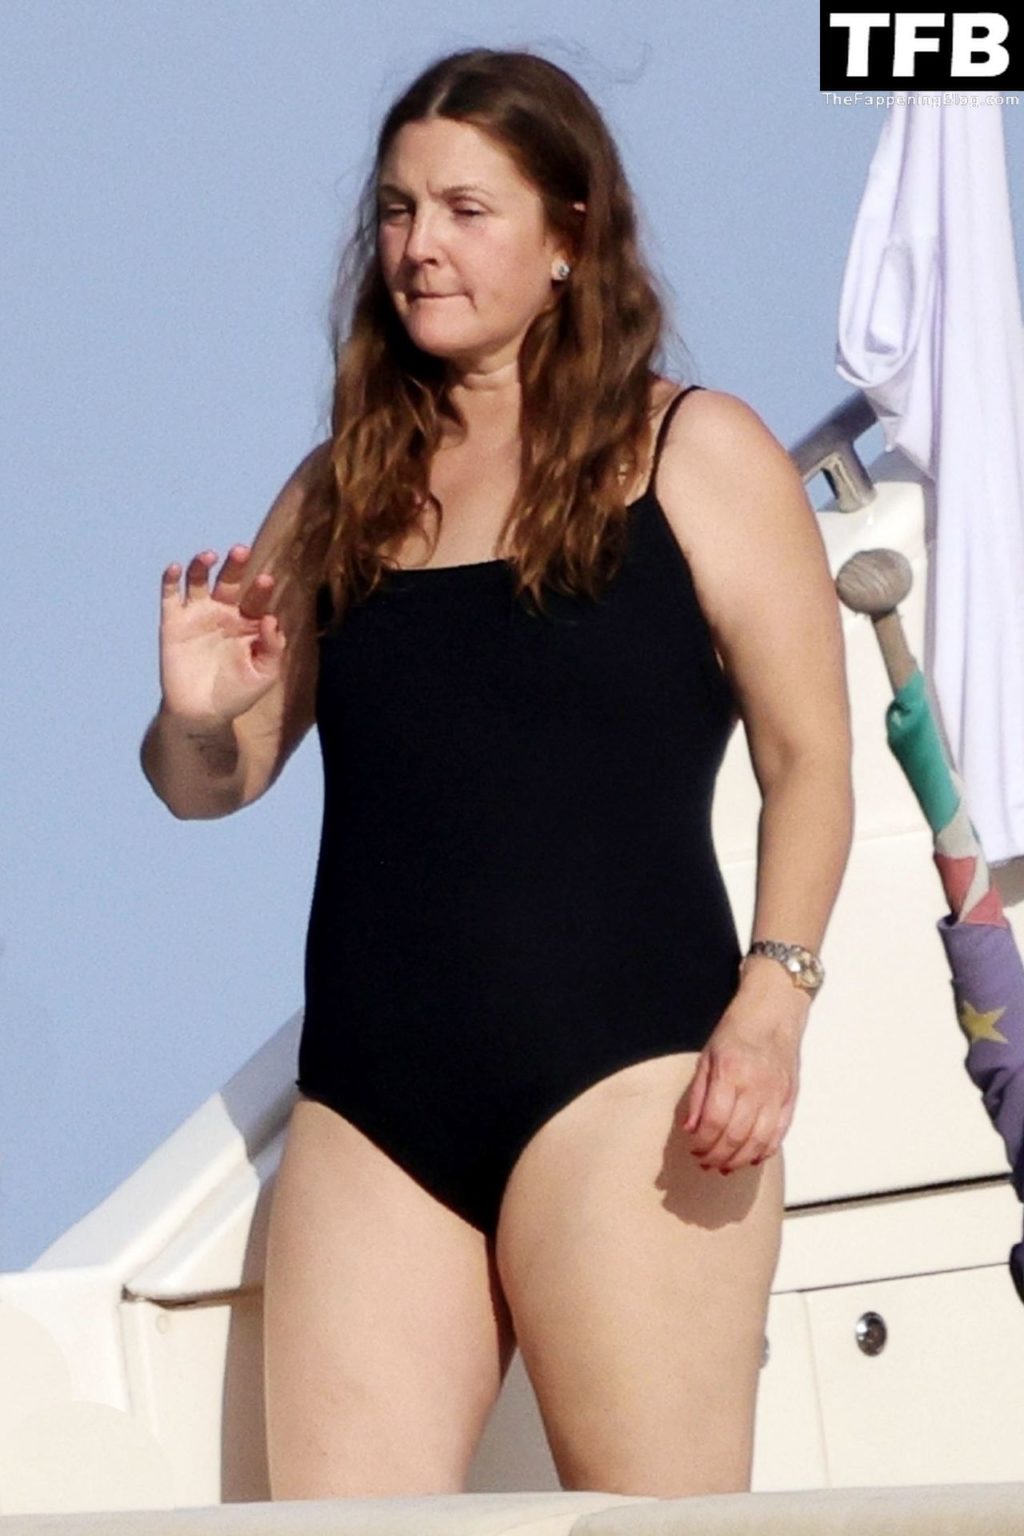 Drew Barrymore Enjoys Her Holidays in Capri (24 Photos)